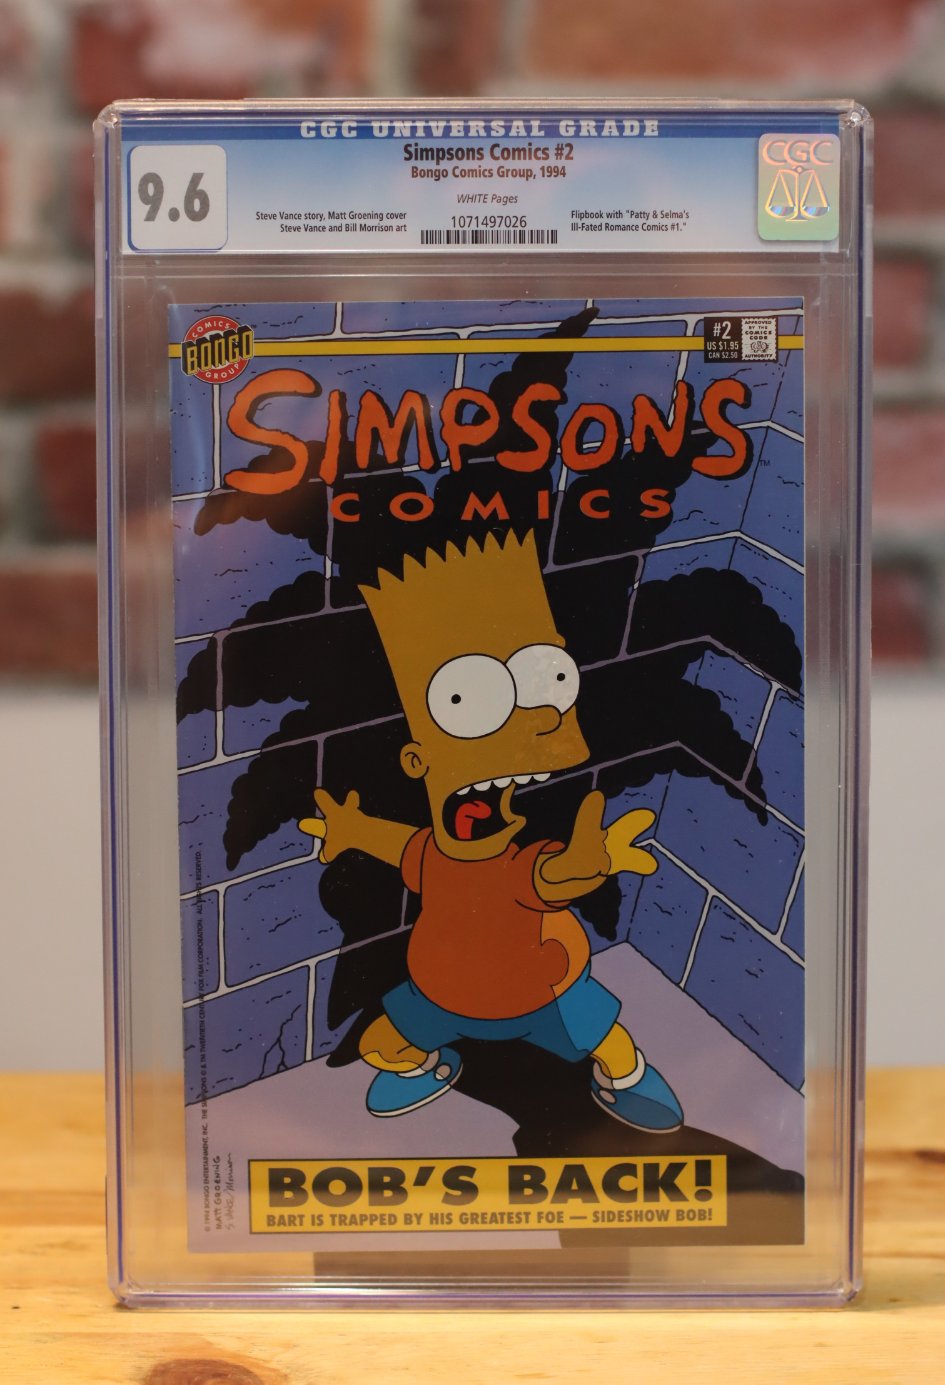 The Simpsons #2 Graded CGC 9.6 Bongo Comic Book Bart Simpson Cover